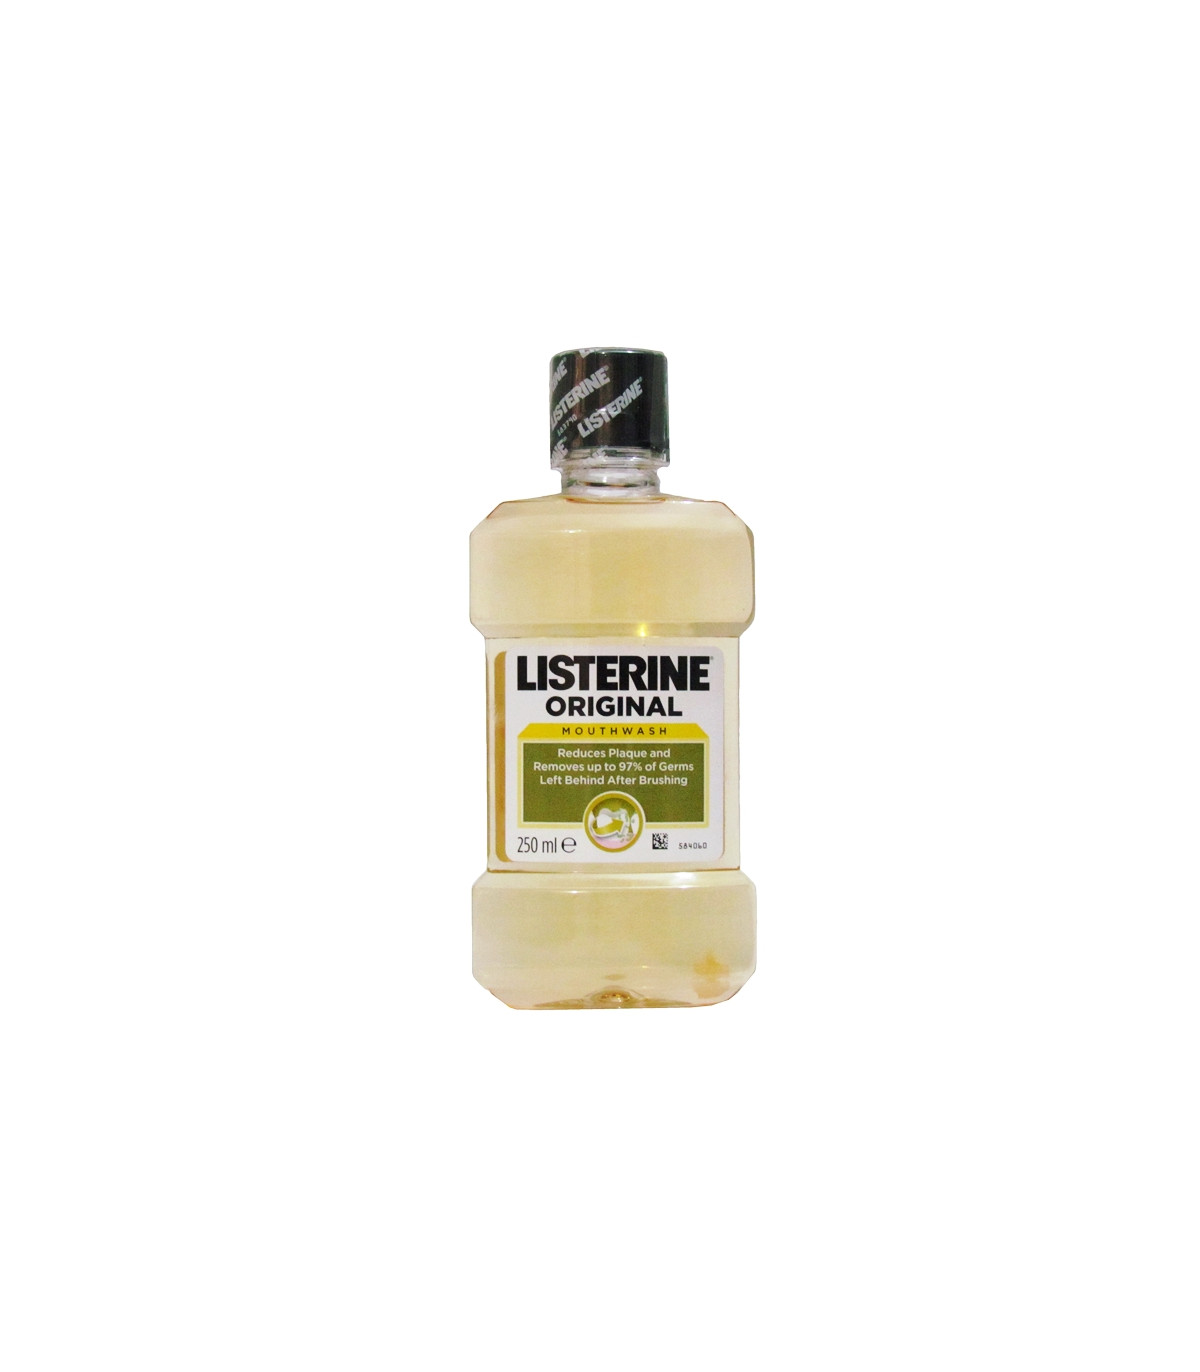 Listerine Original Mouthwash 250ml